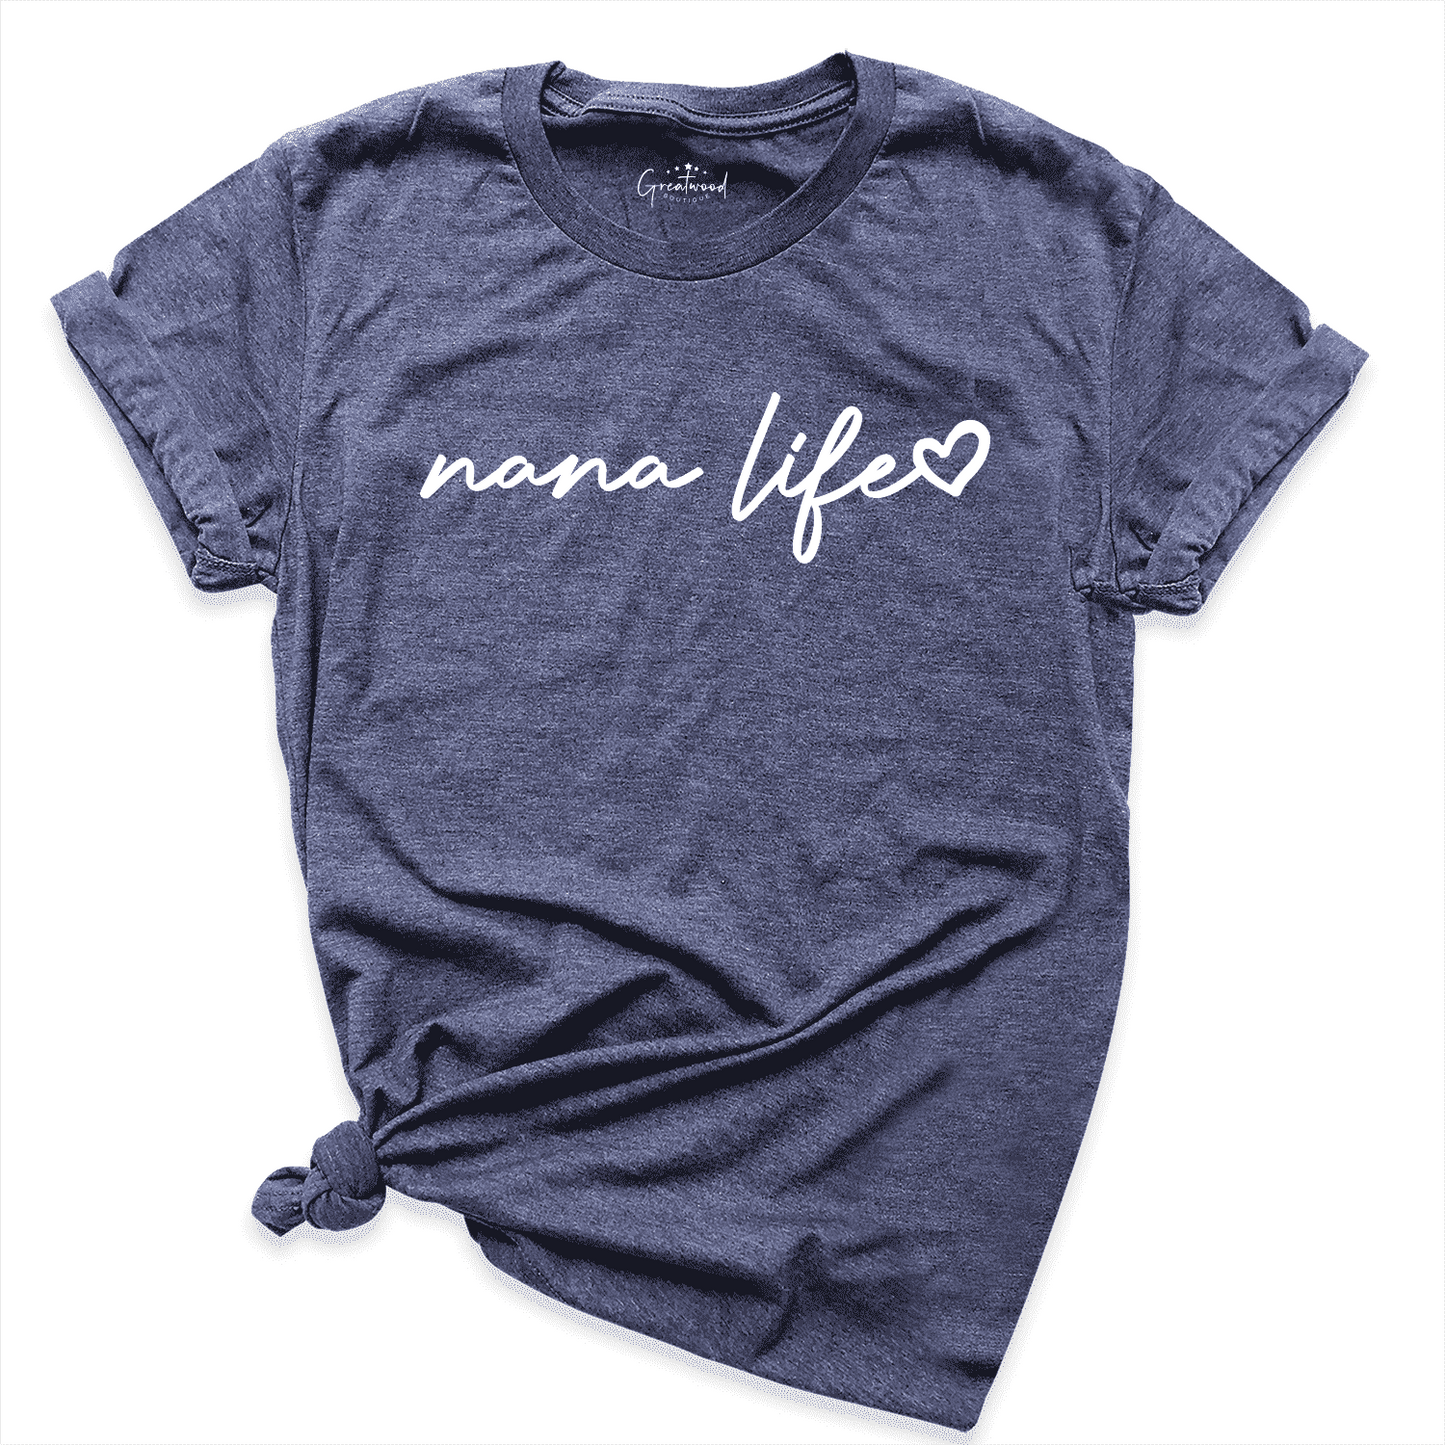 Nana Life Shirt Navy - Greatwood Boutique